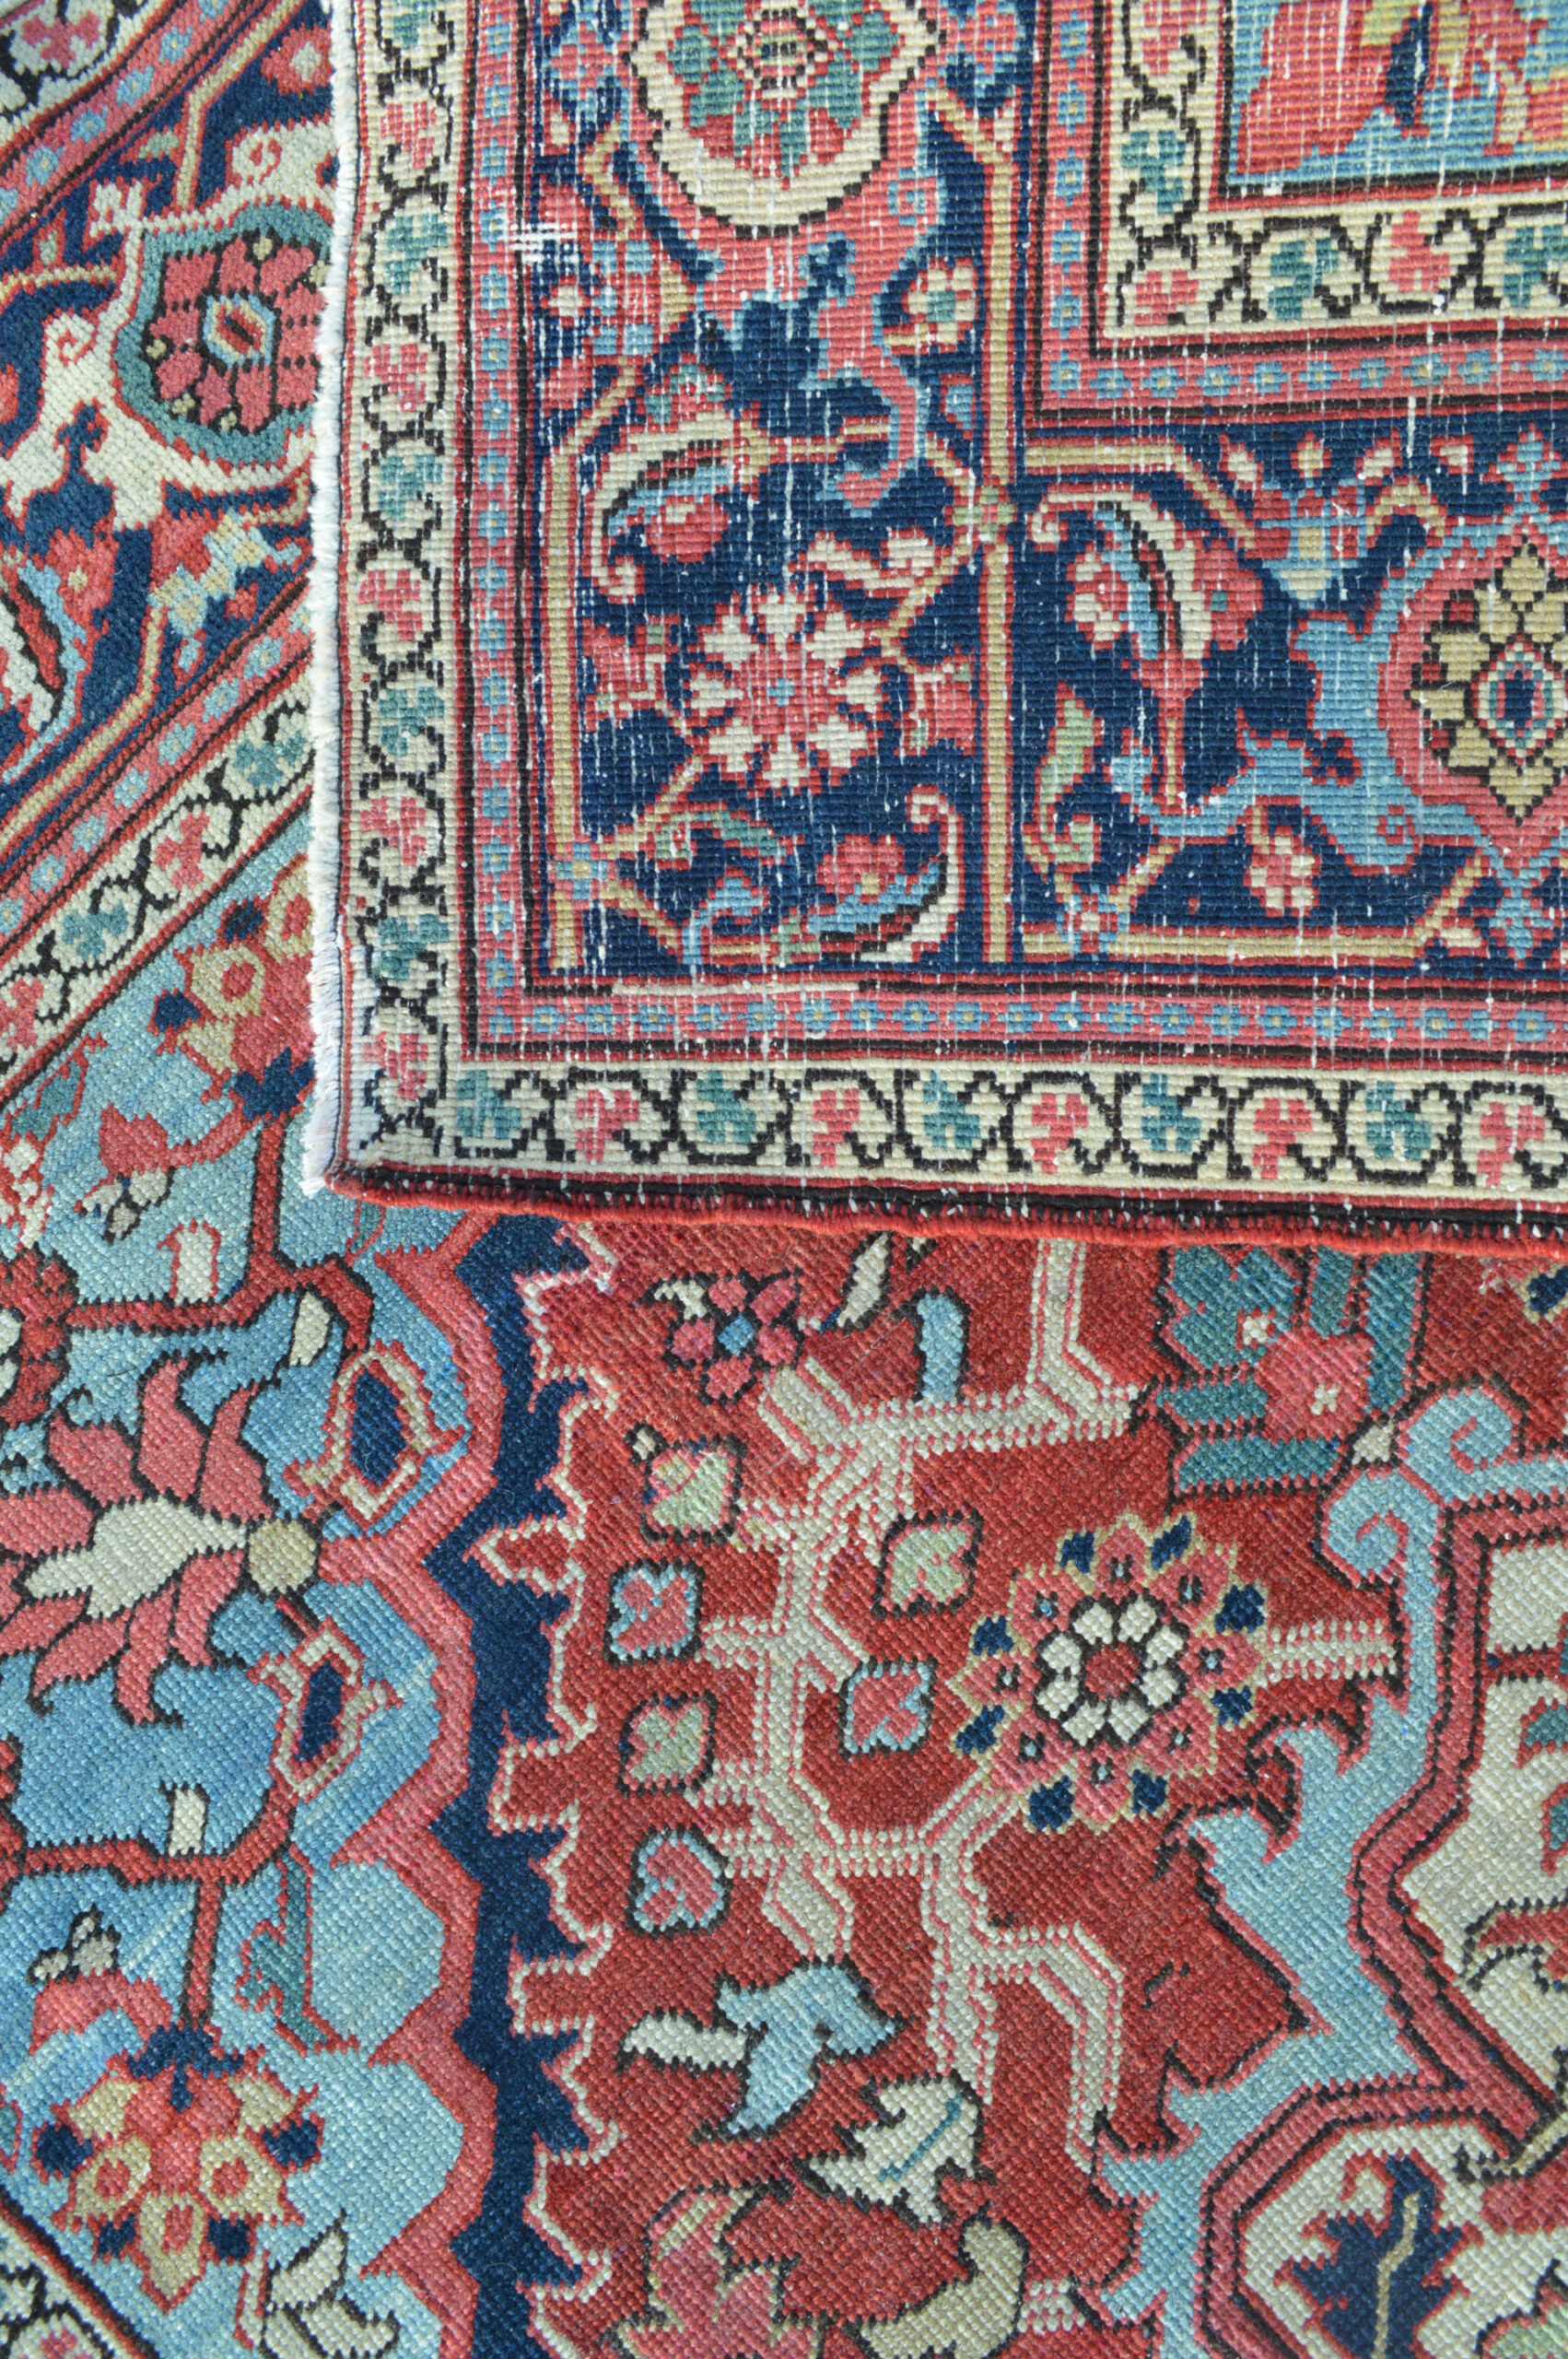 Weave detail of an antique northwest Persian Heriz "Serapi" rug - Douglas Stock Gallery, antique Oriental rugs Boston, NYC, DC